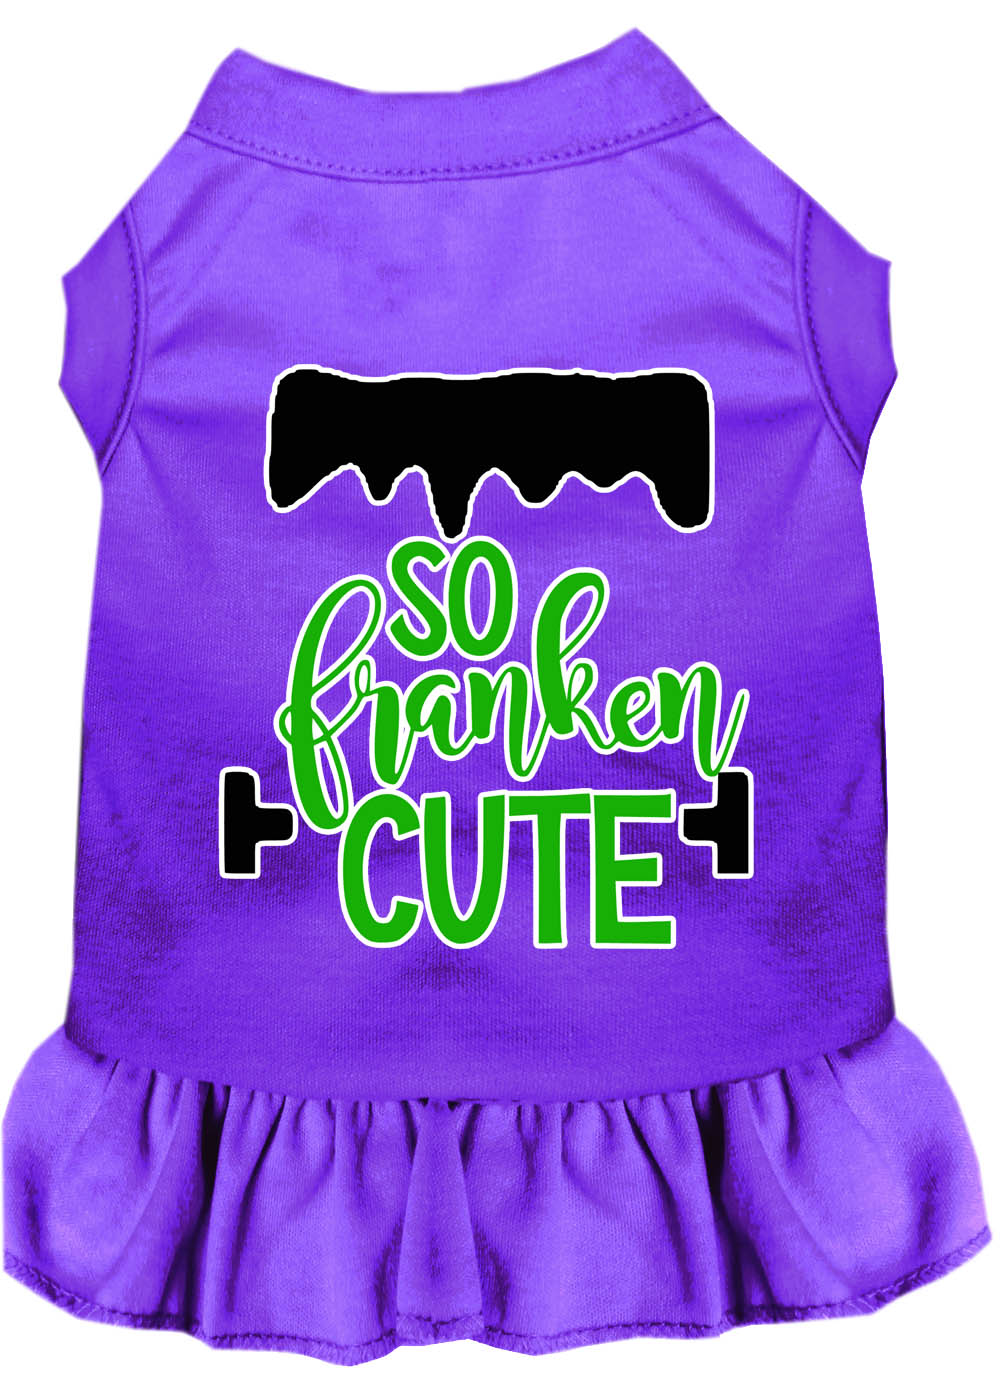 So Franken Cute Screen Print Dog Dress Purple XXL